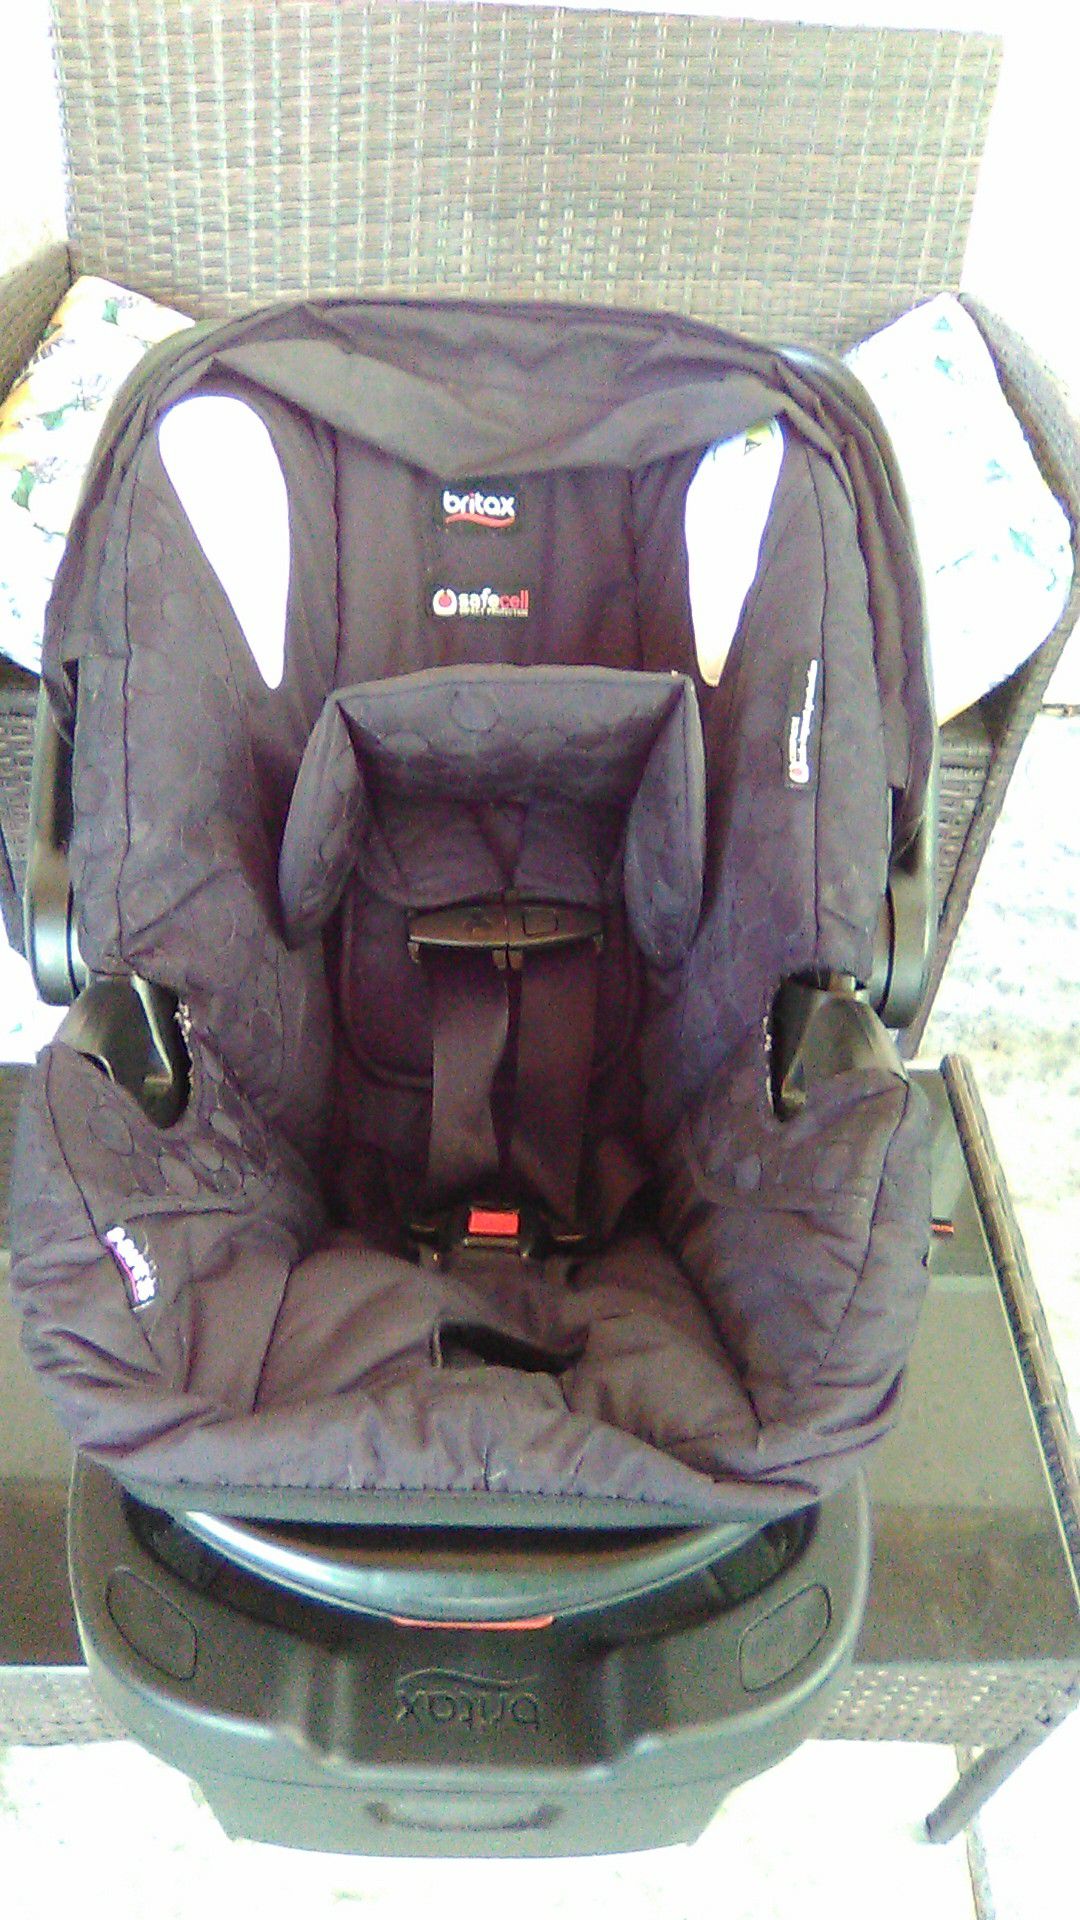 Britax B Safe 35 infant car seat.